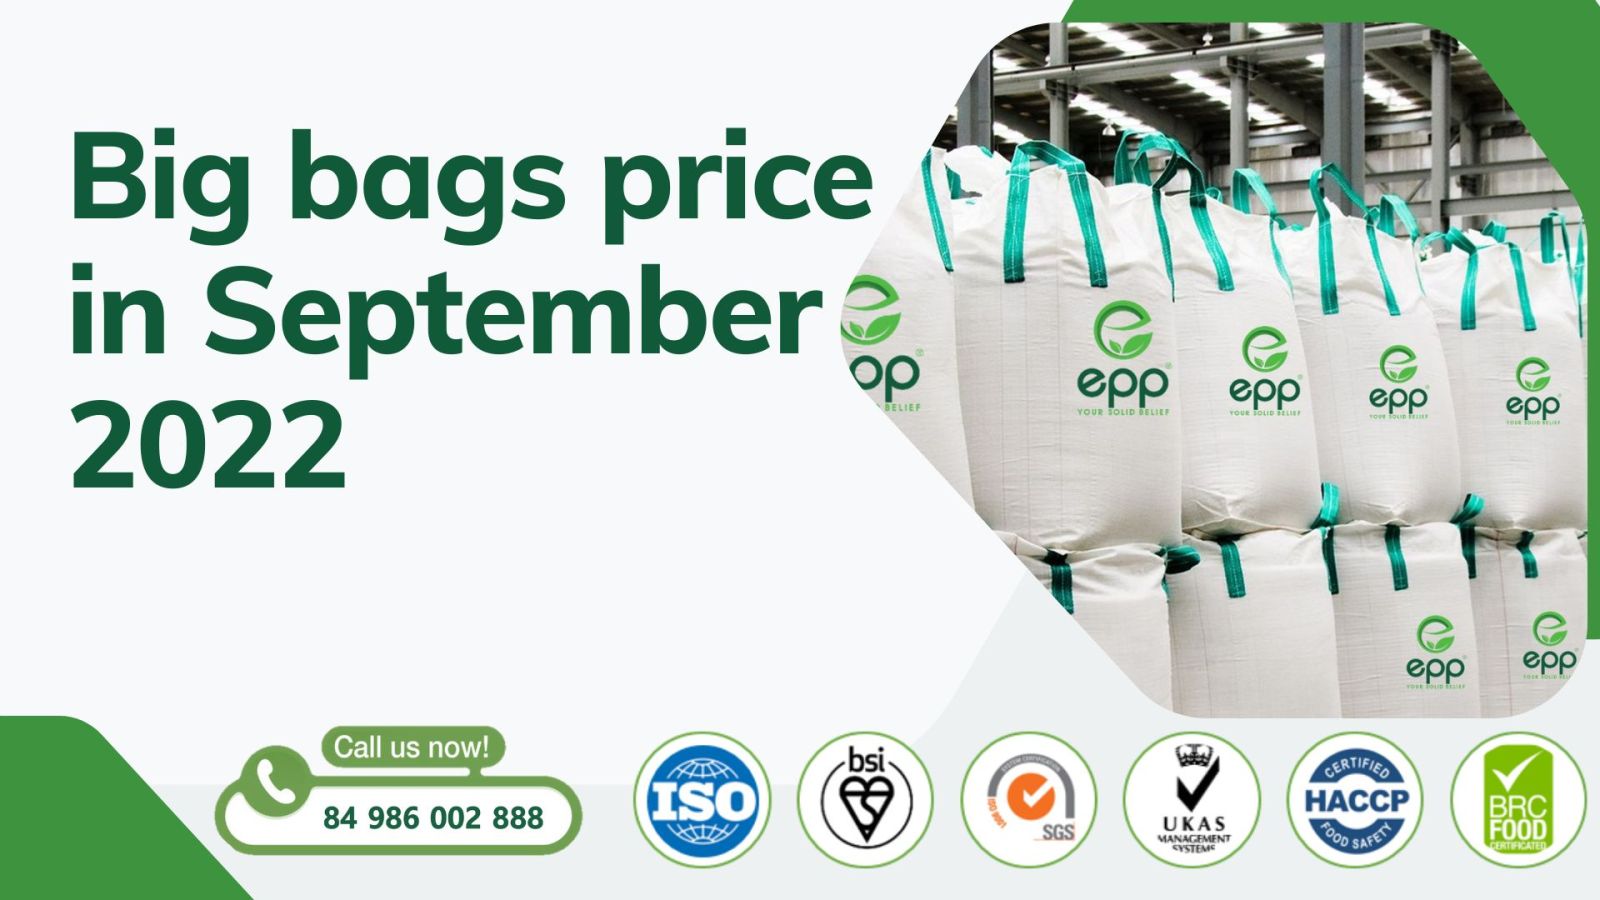 Big-bags-price-in-September-2022.jpg